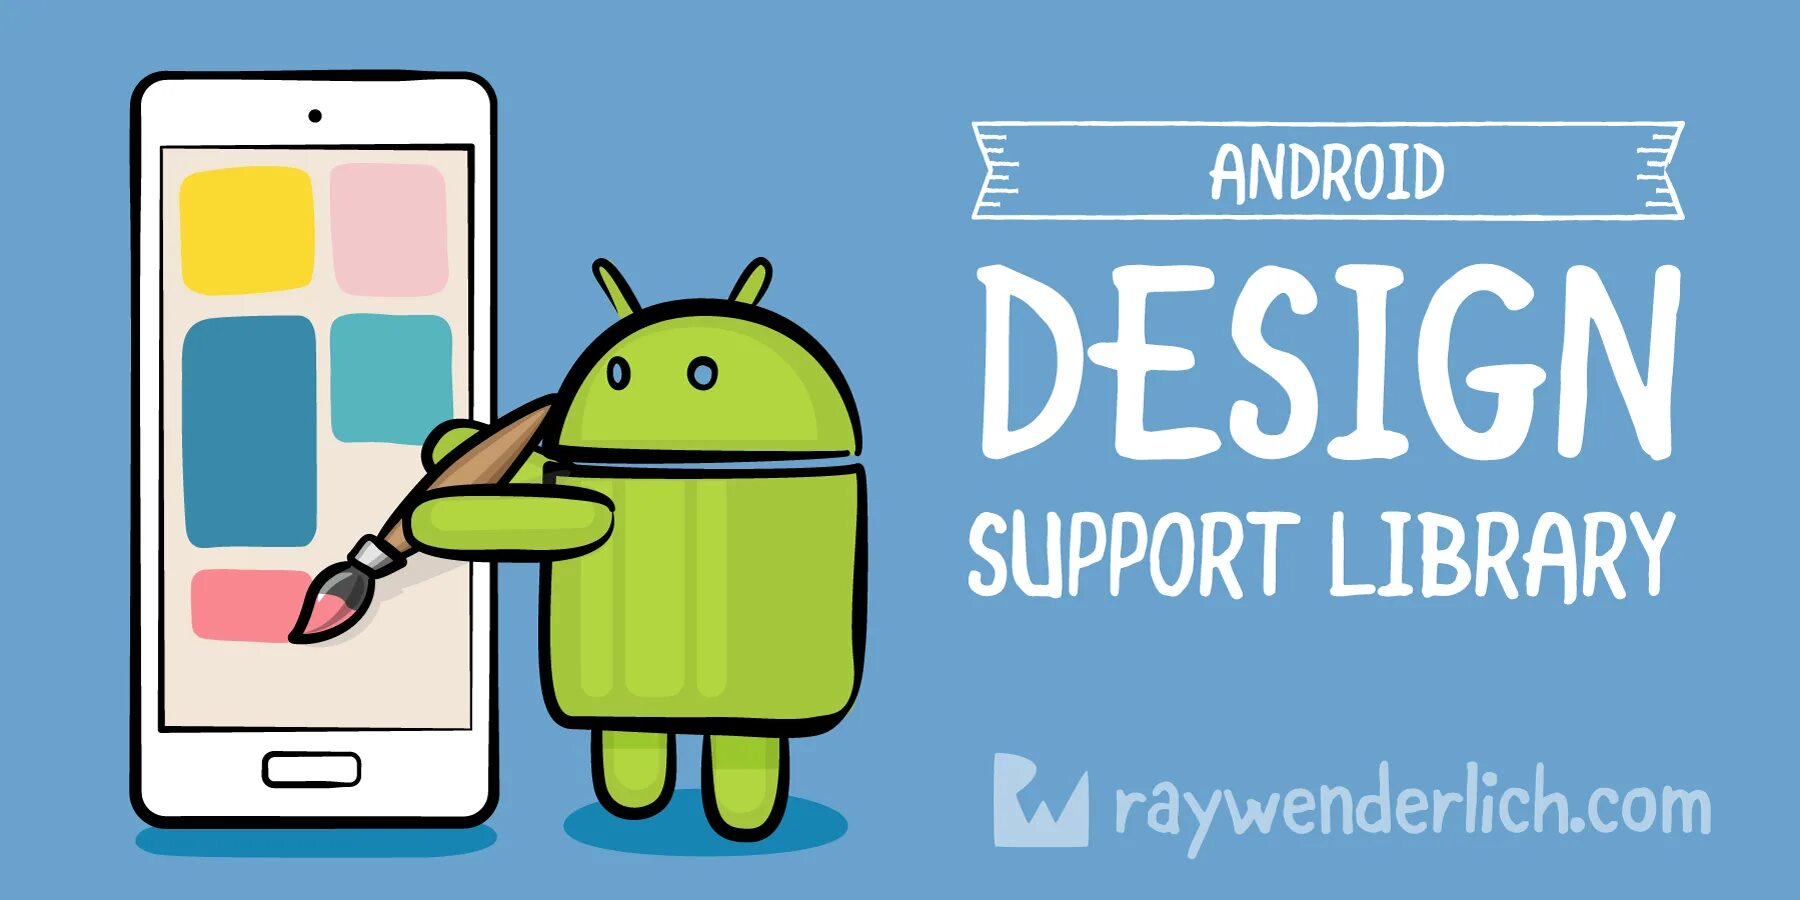 Lib support. Android support Library. Android Design. Android дизайн ссылки. Модный дизайн андроид.